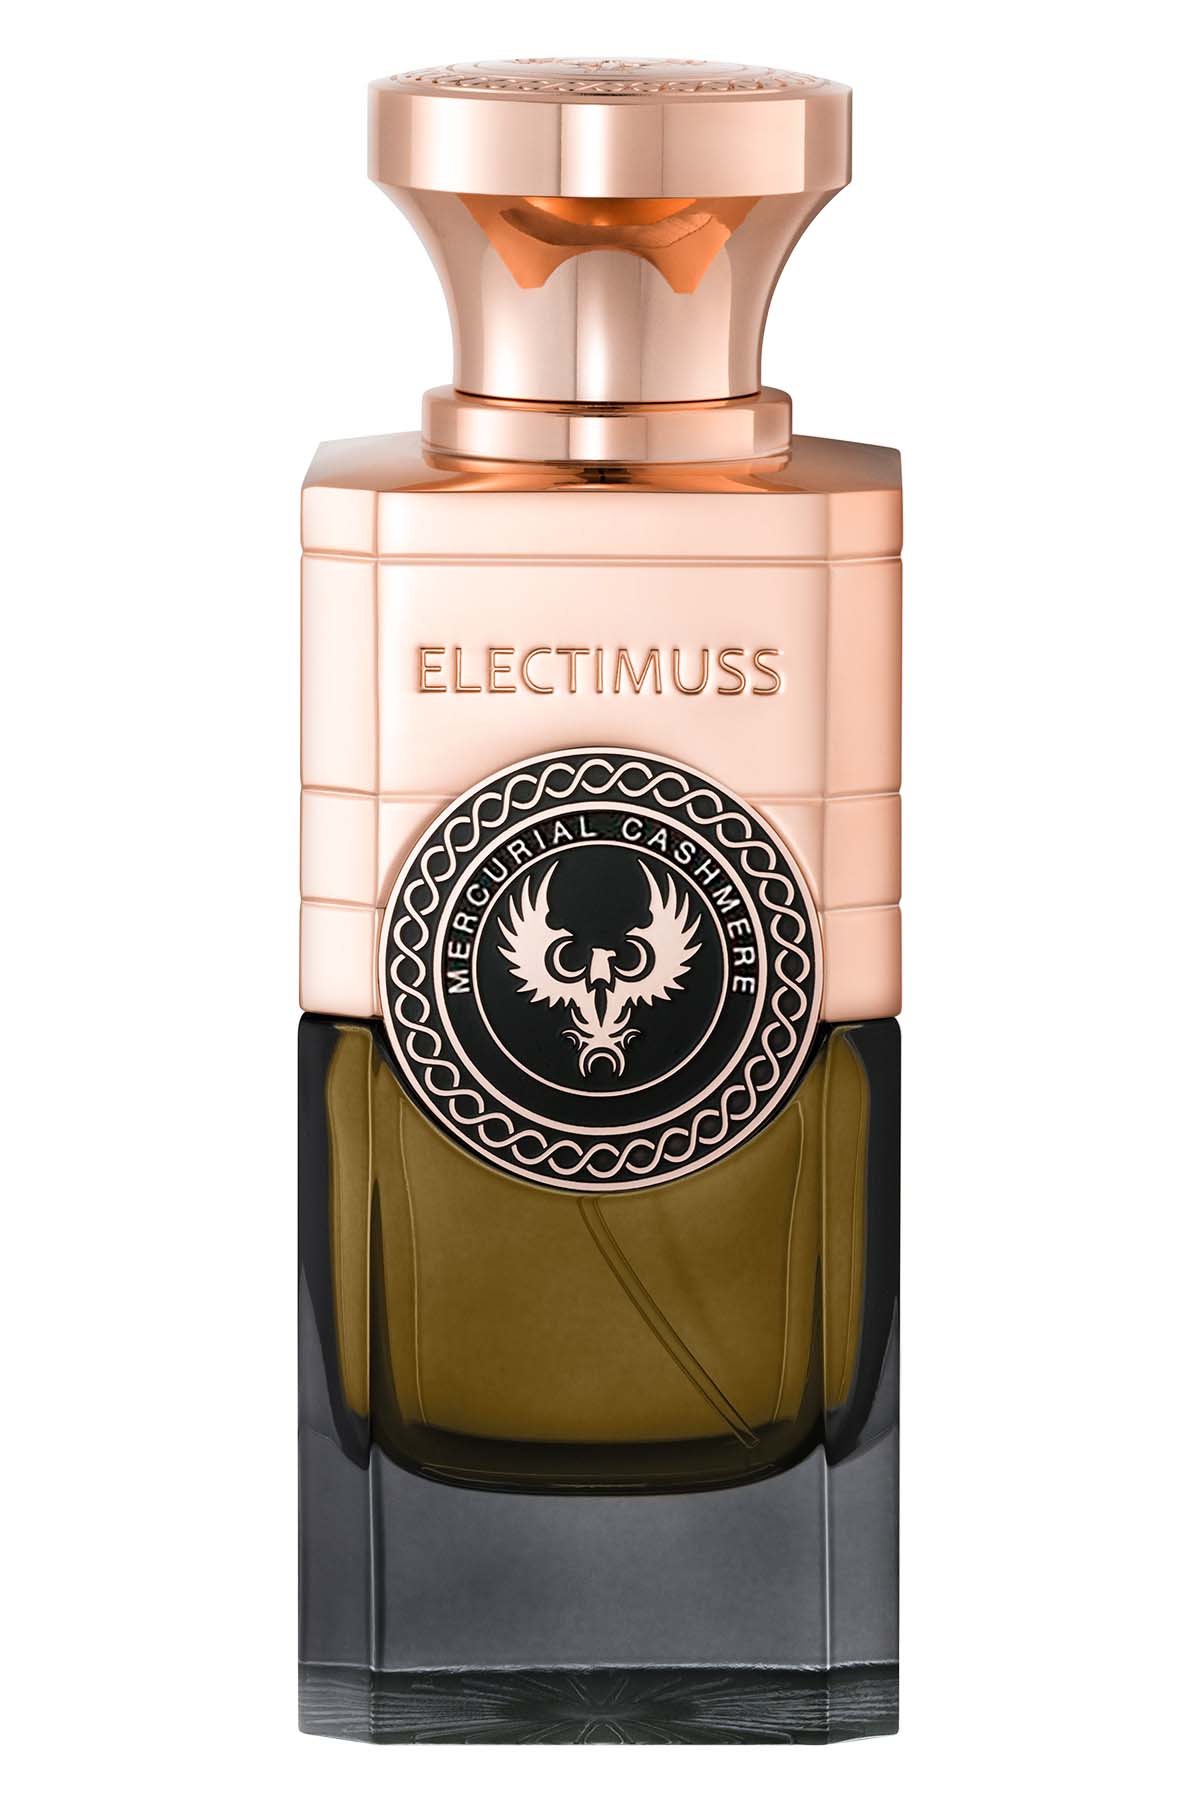 Electimuss Mercurial Cashmere Extrait de Parfum